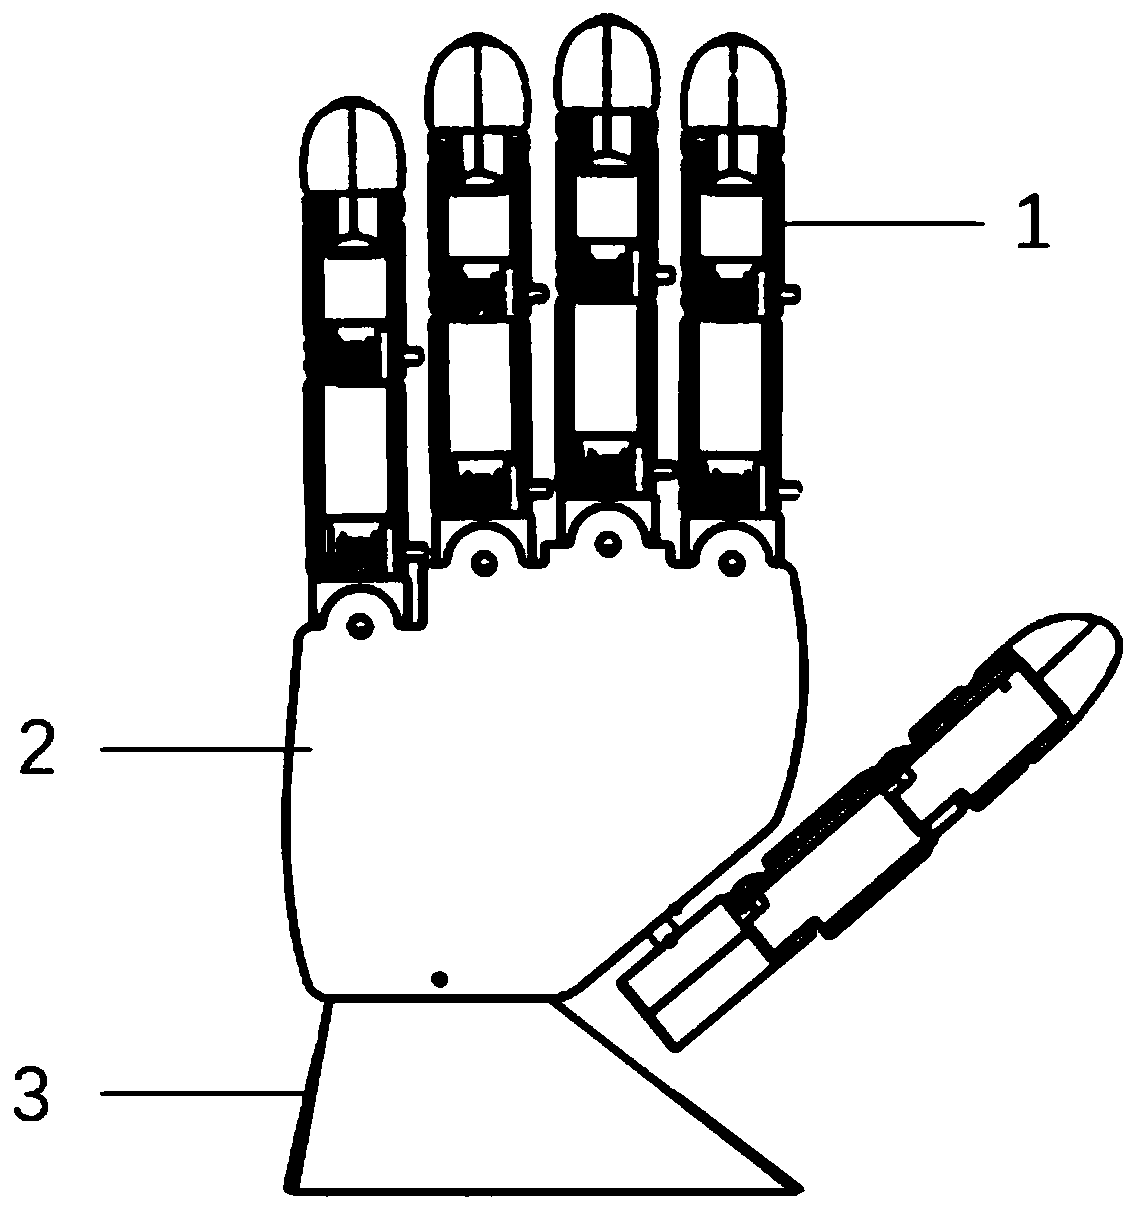 Humanoid five-finger manipulator